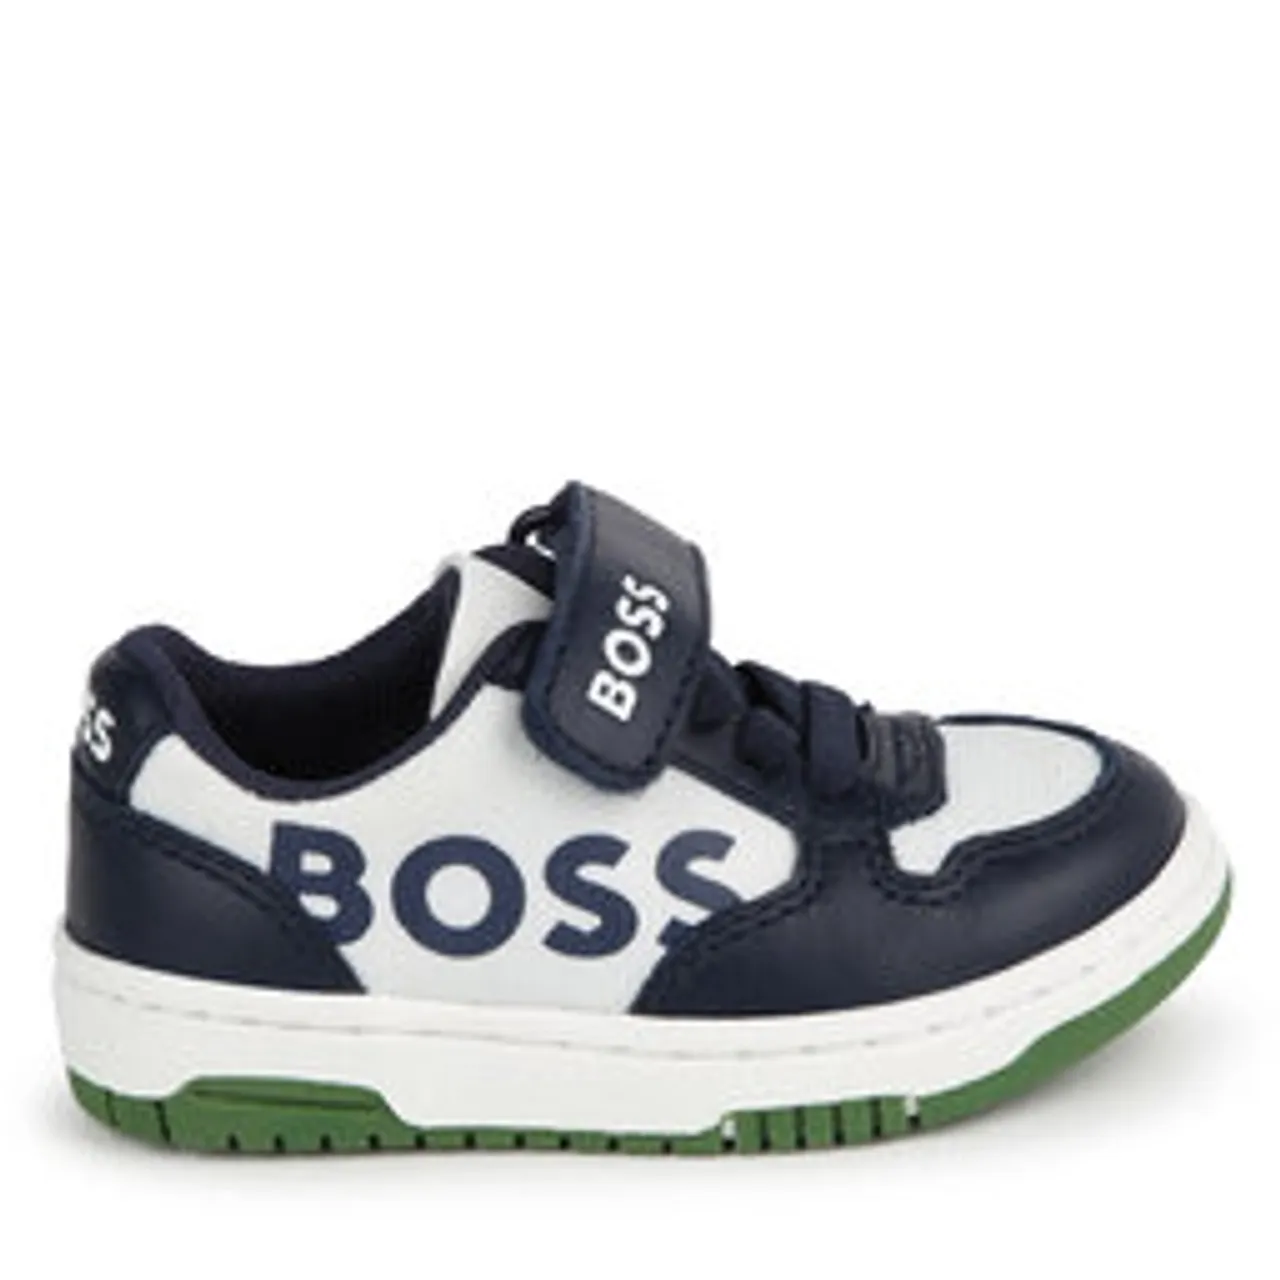 Sneakers Boss J50875 S Navy 849